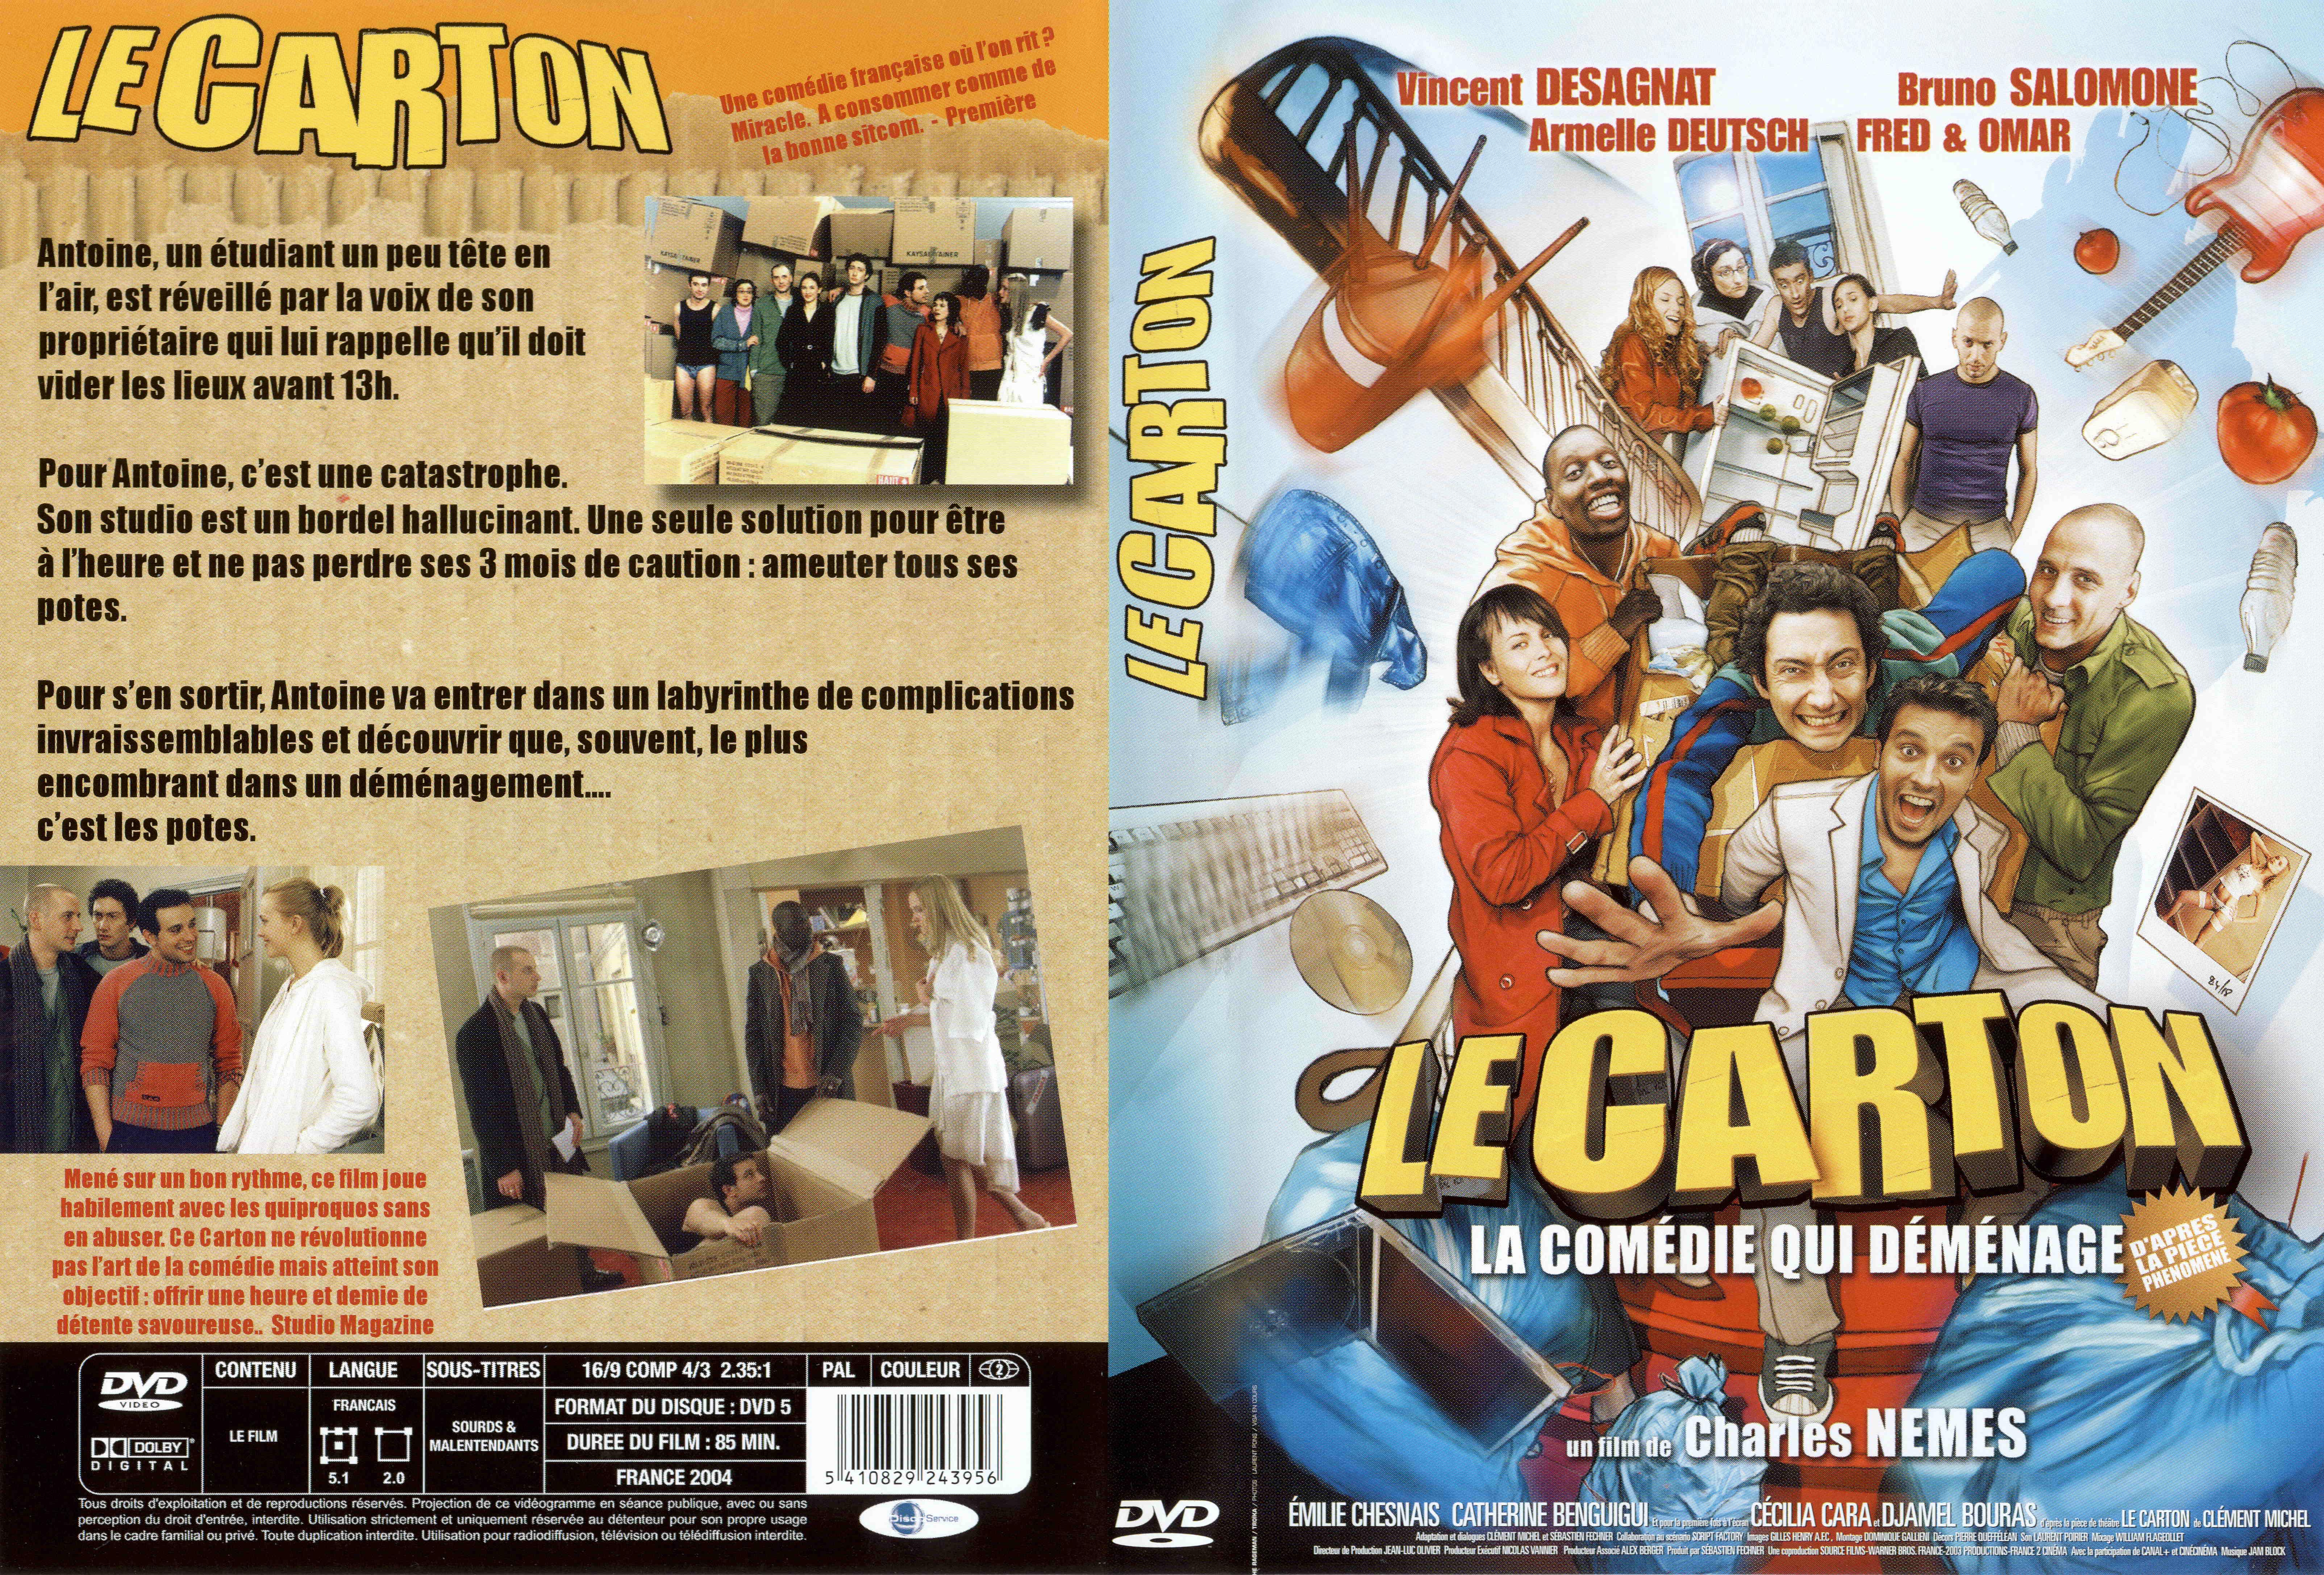 Jaquette DVD Le carton v2